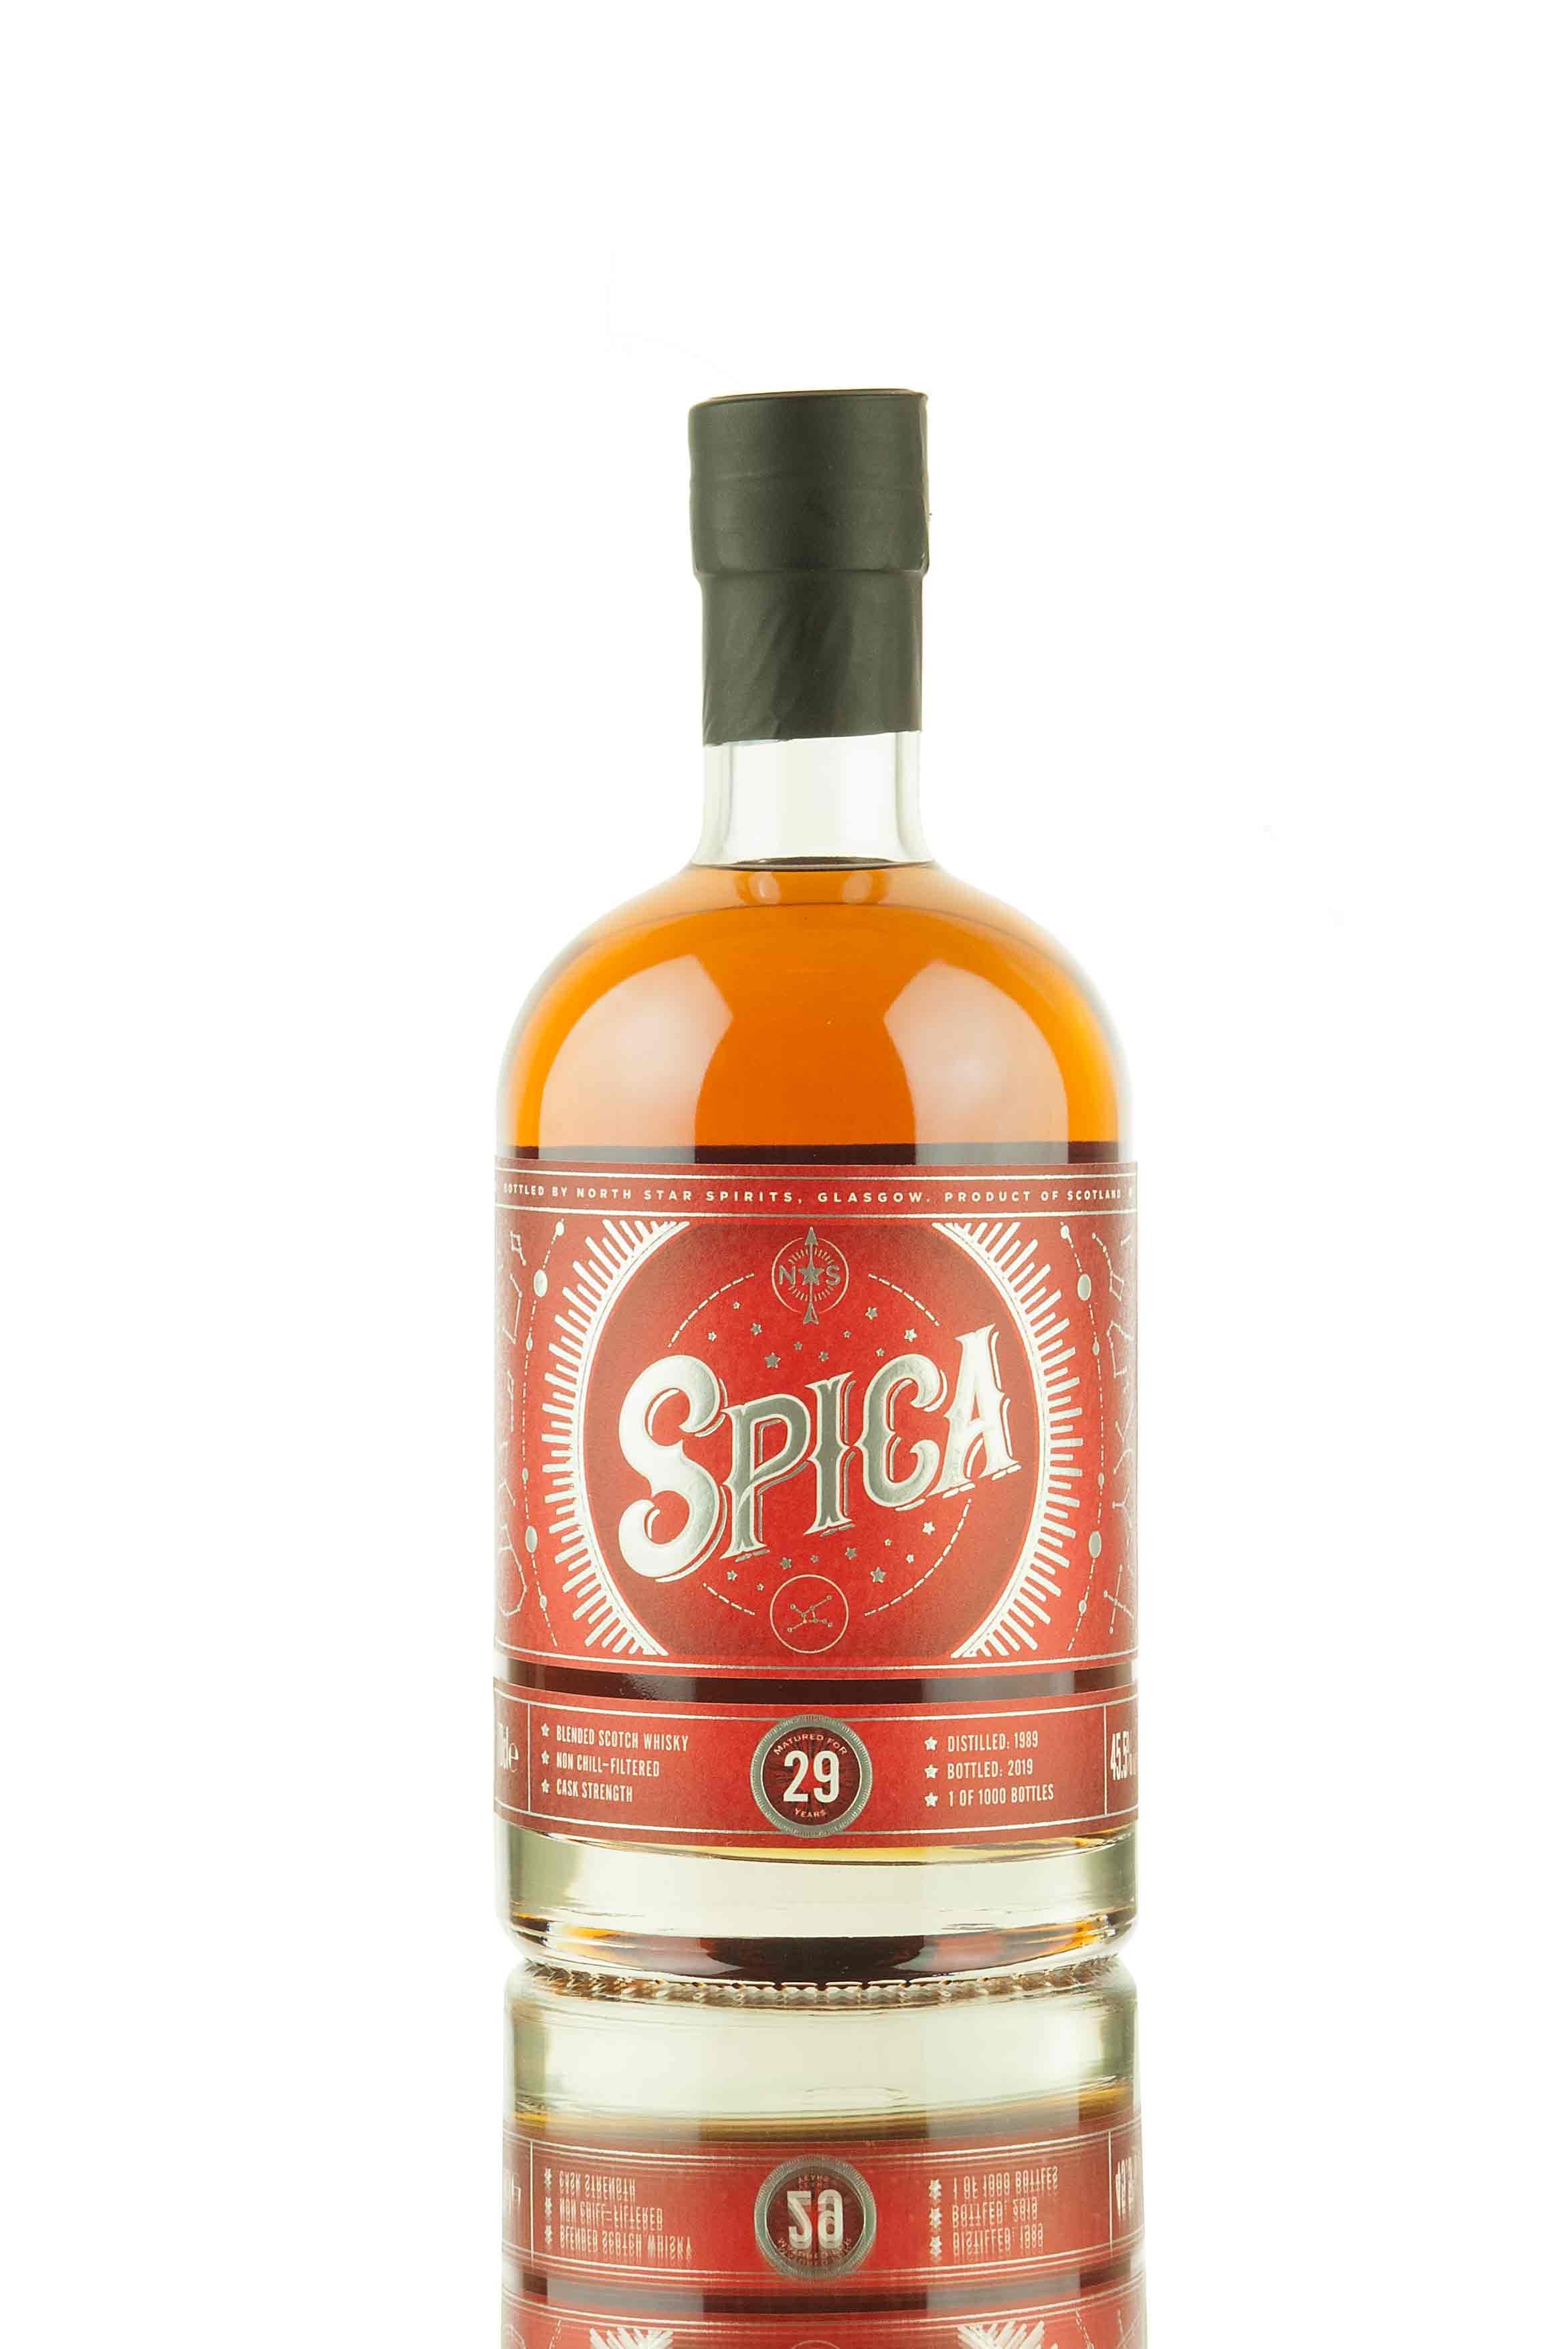 Spica 29 Year Old - 1989 | Edition 2 | North Star Spirits